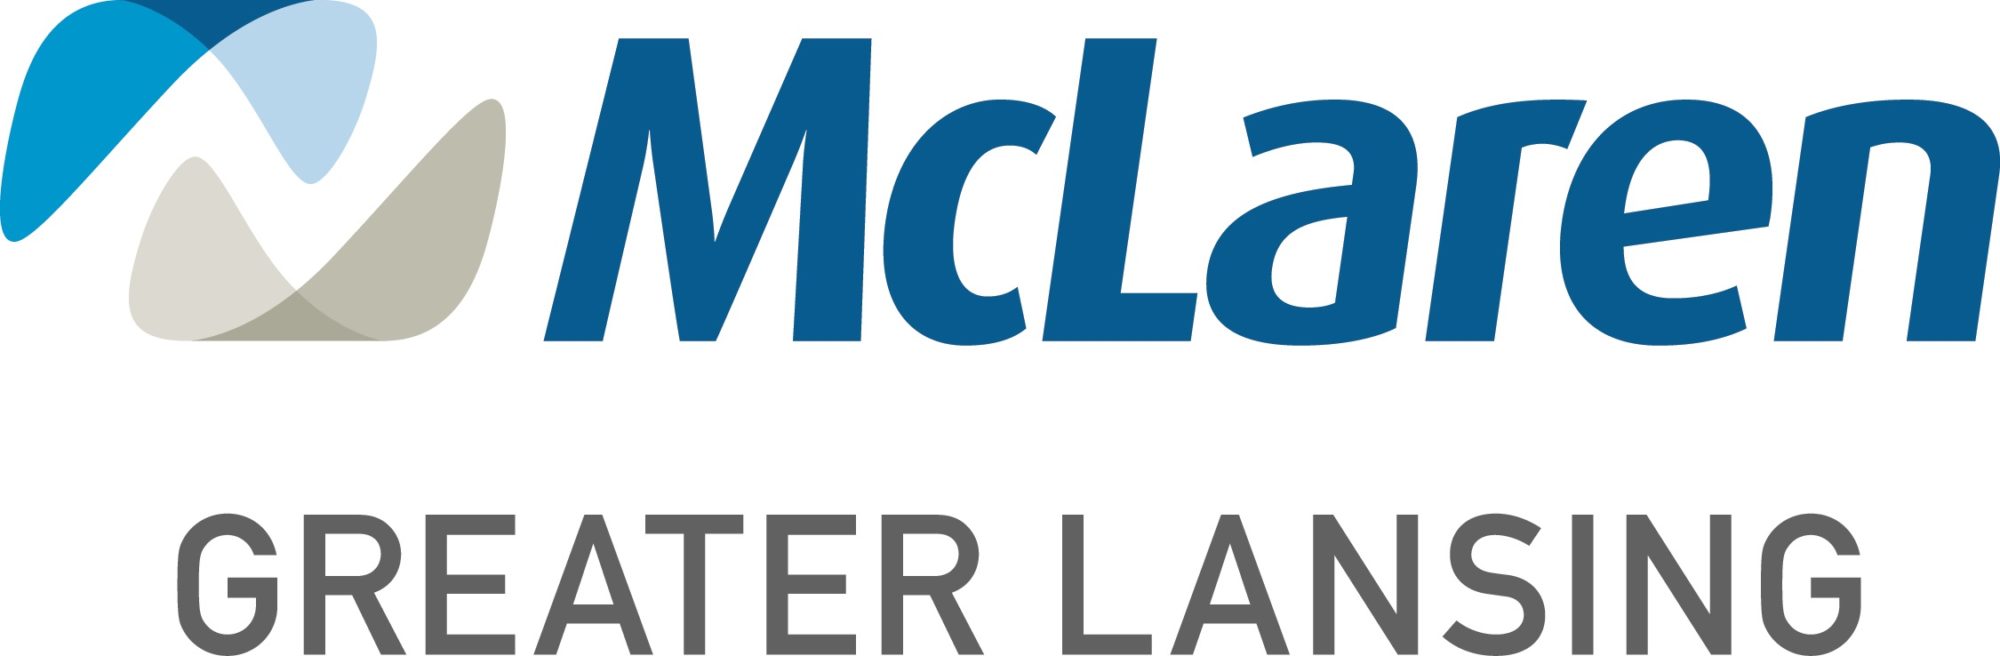 mgl logo